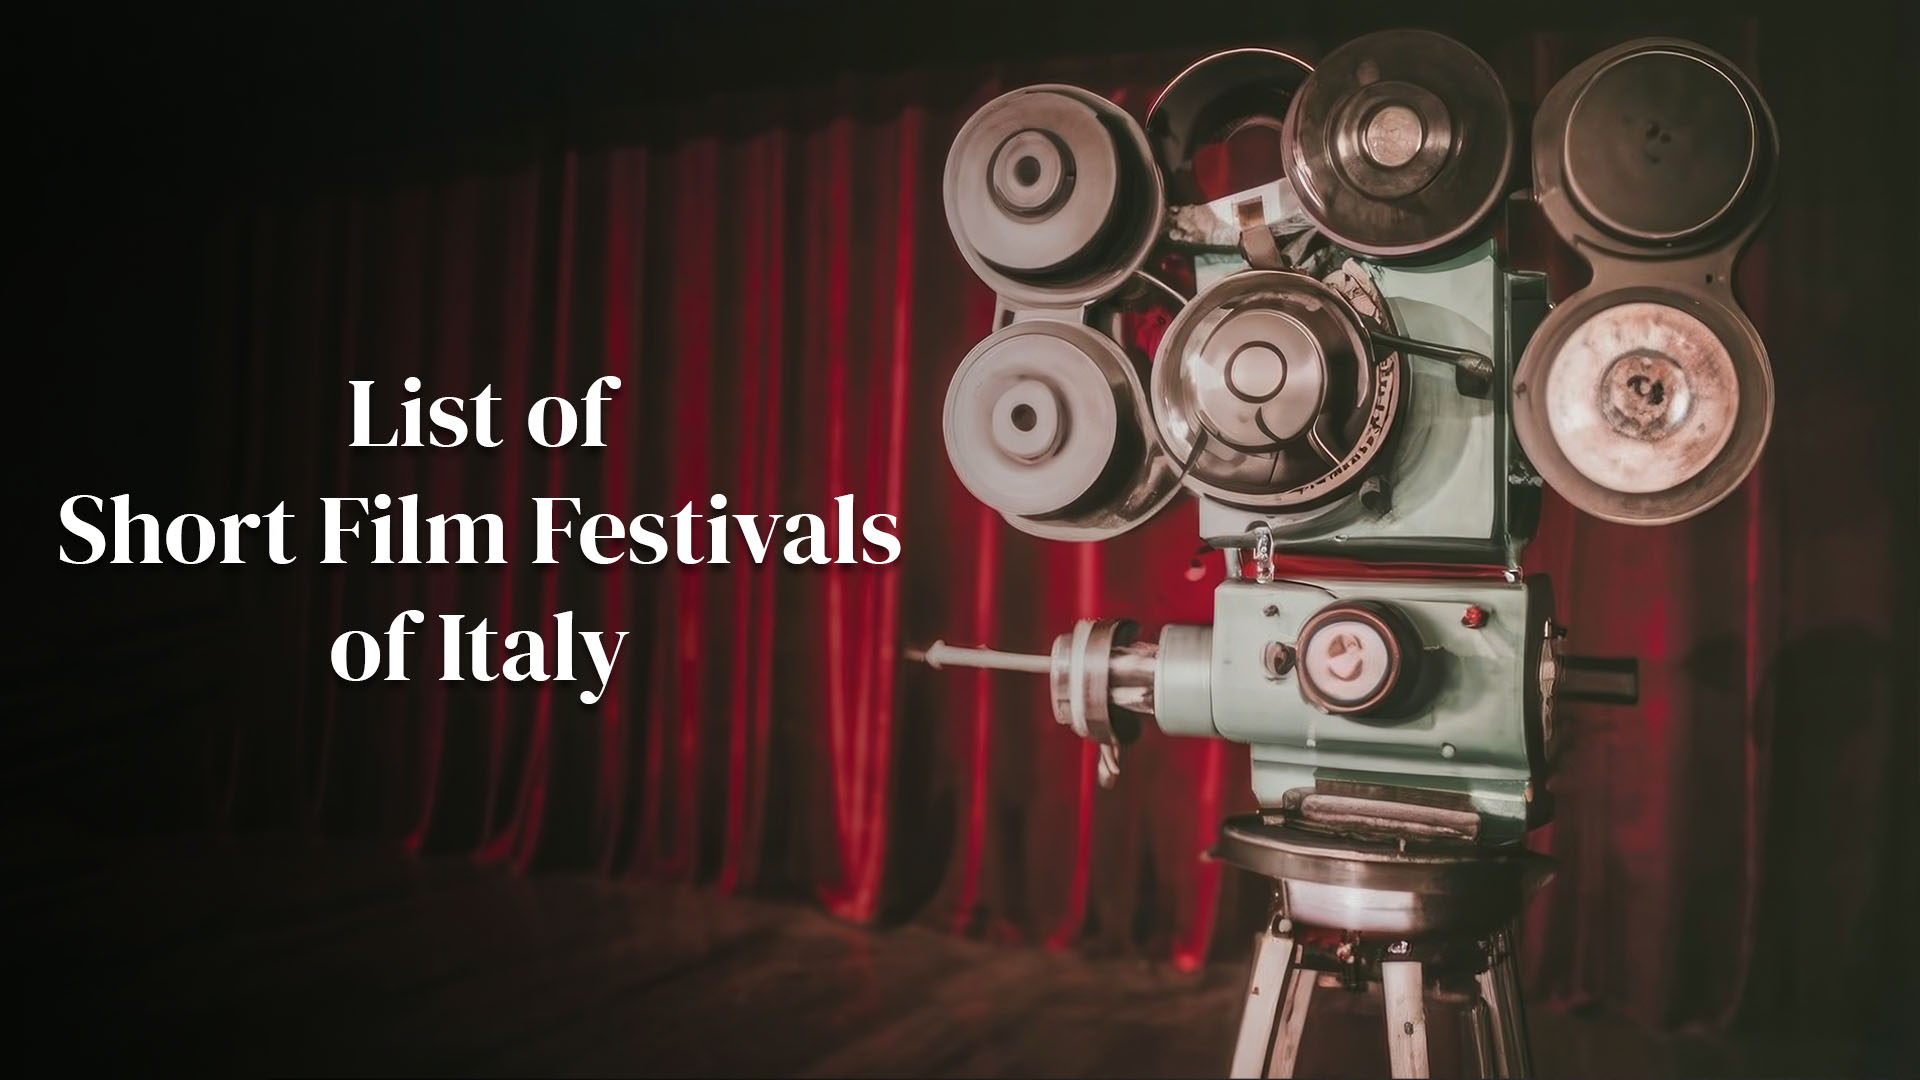 List of Short Film Festivals of Italy